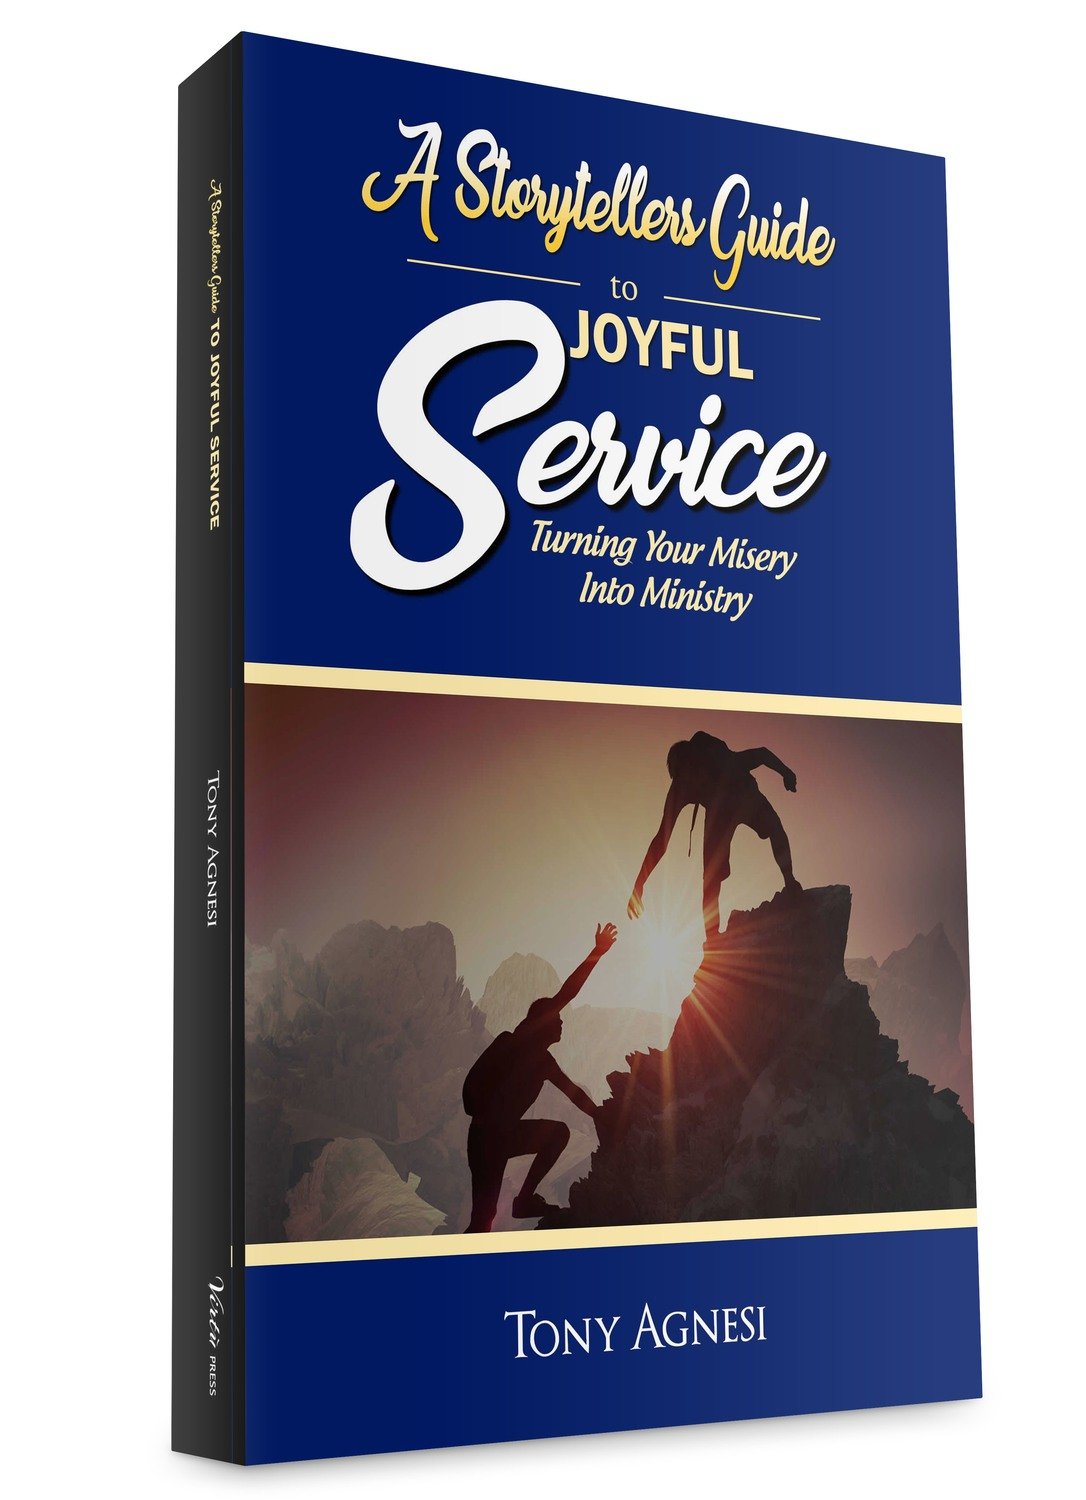 A Storyteller's Guide to Joyful Service